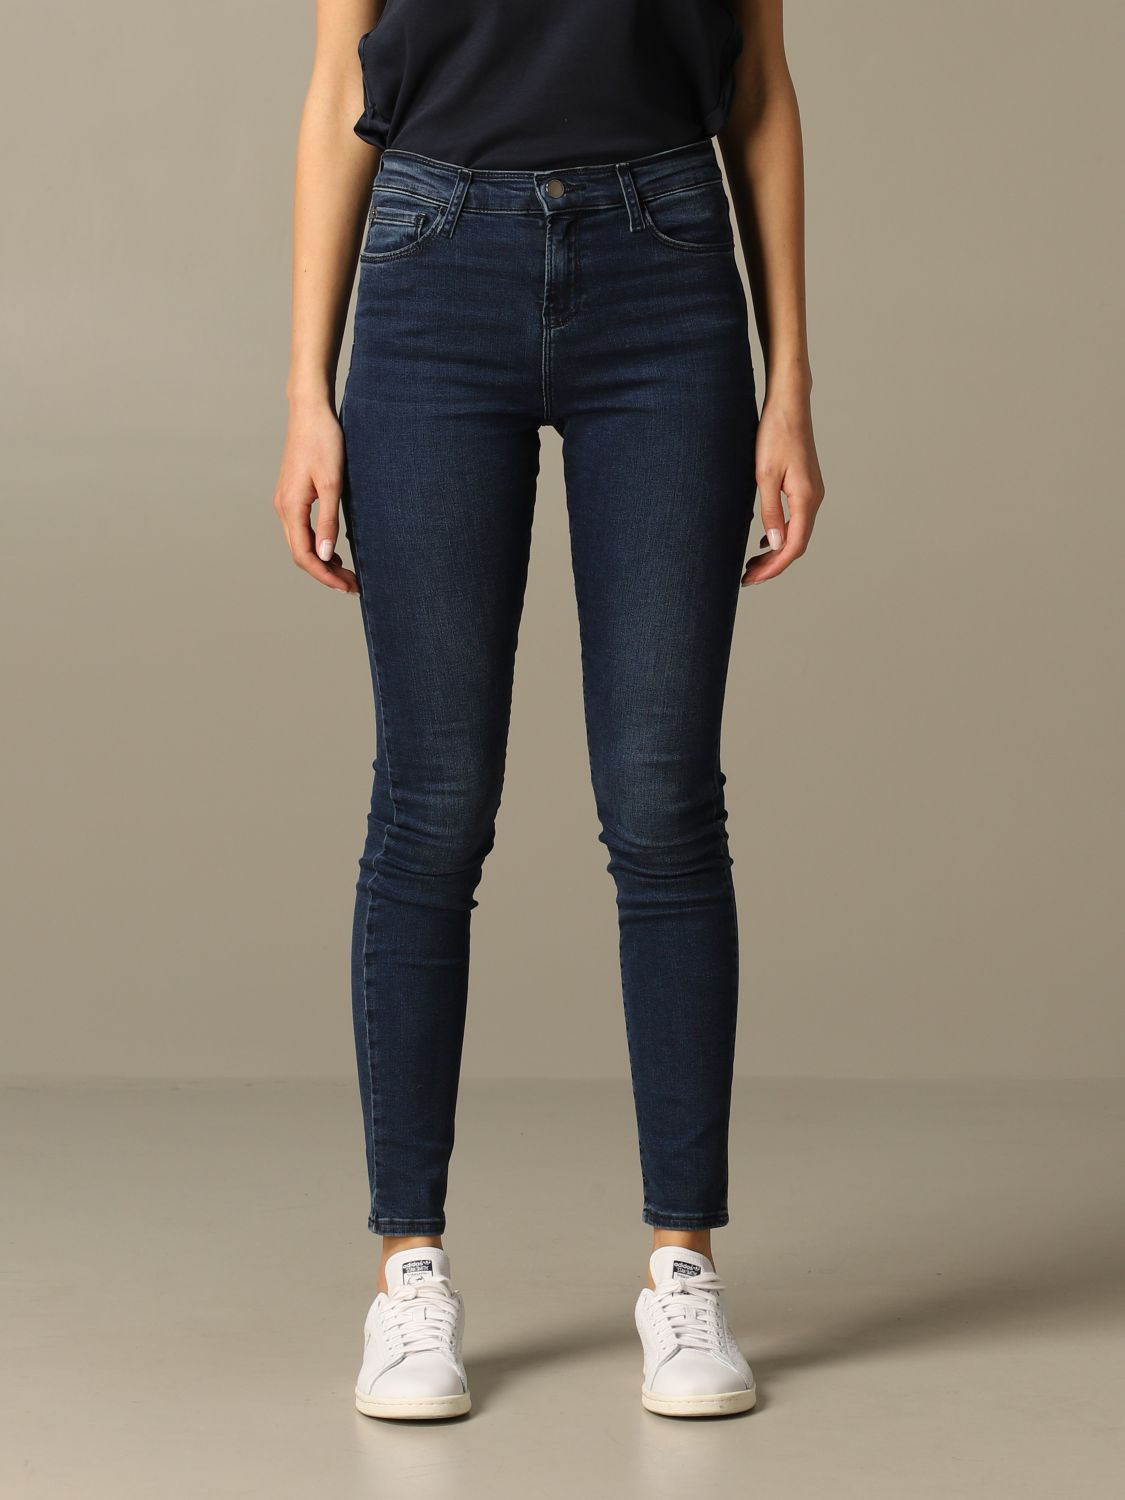 Emporio Armani Outlet: jeans for woman - Denim | Emporio Armani jeans  3H2J20 2D3LZ online on 